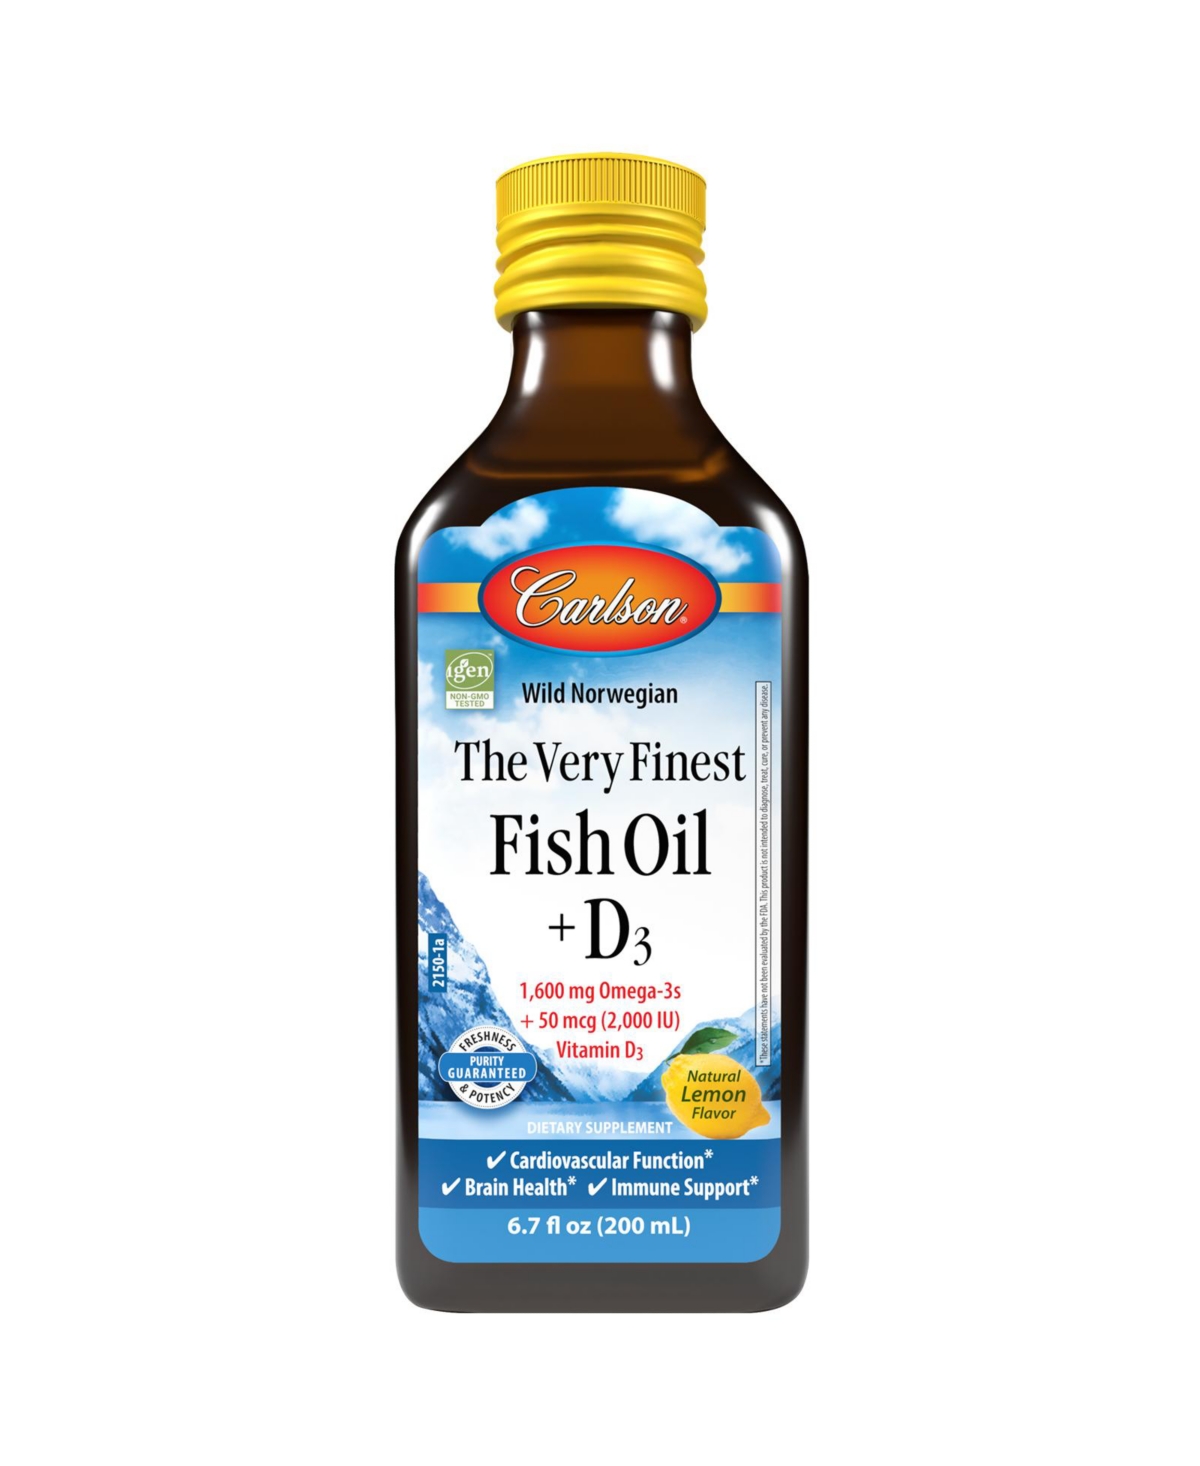 Carlson - The Very Finest Fish Oil + D3, 1600 mg Omega-3s, 50 mcg (2000 Iu) Vitamin D3, Norwegian, Lemon, 200 mL (6.7 Fl Oz)